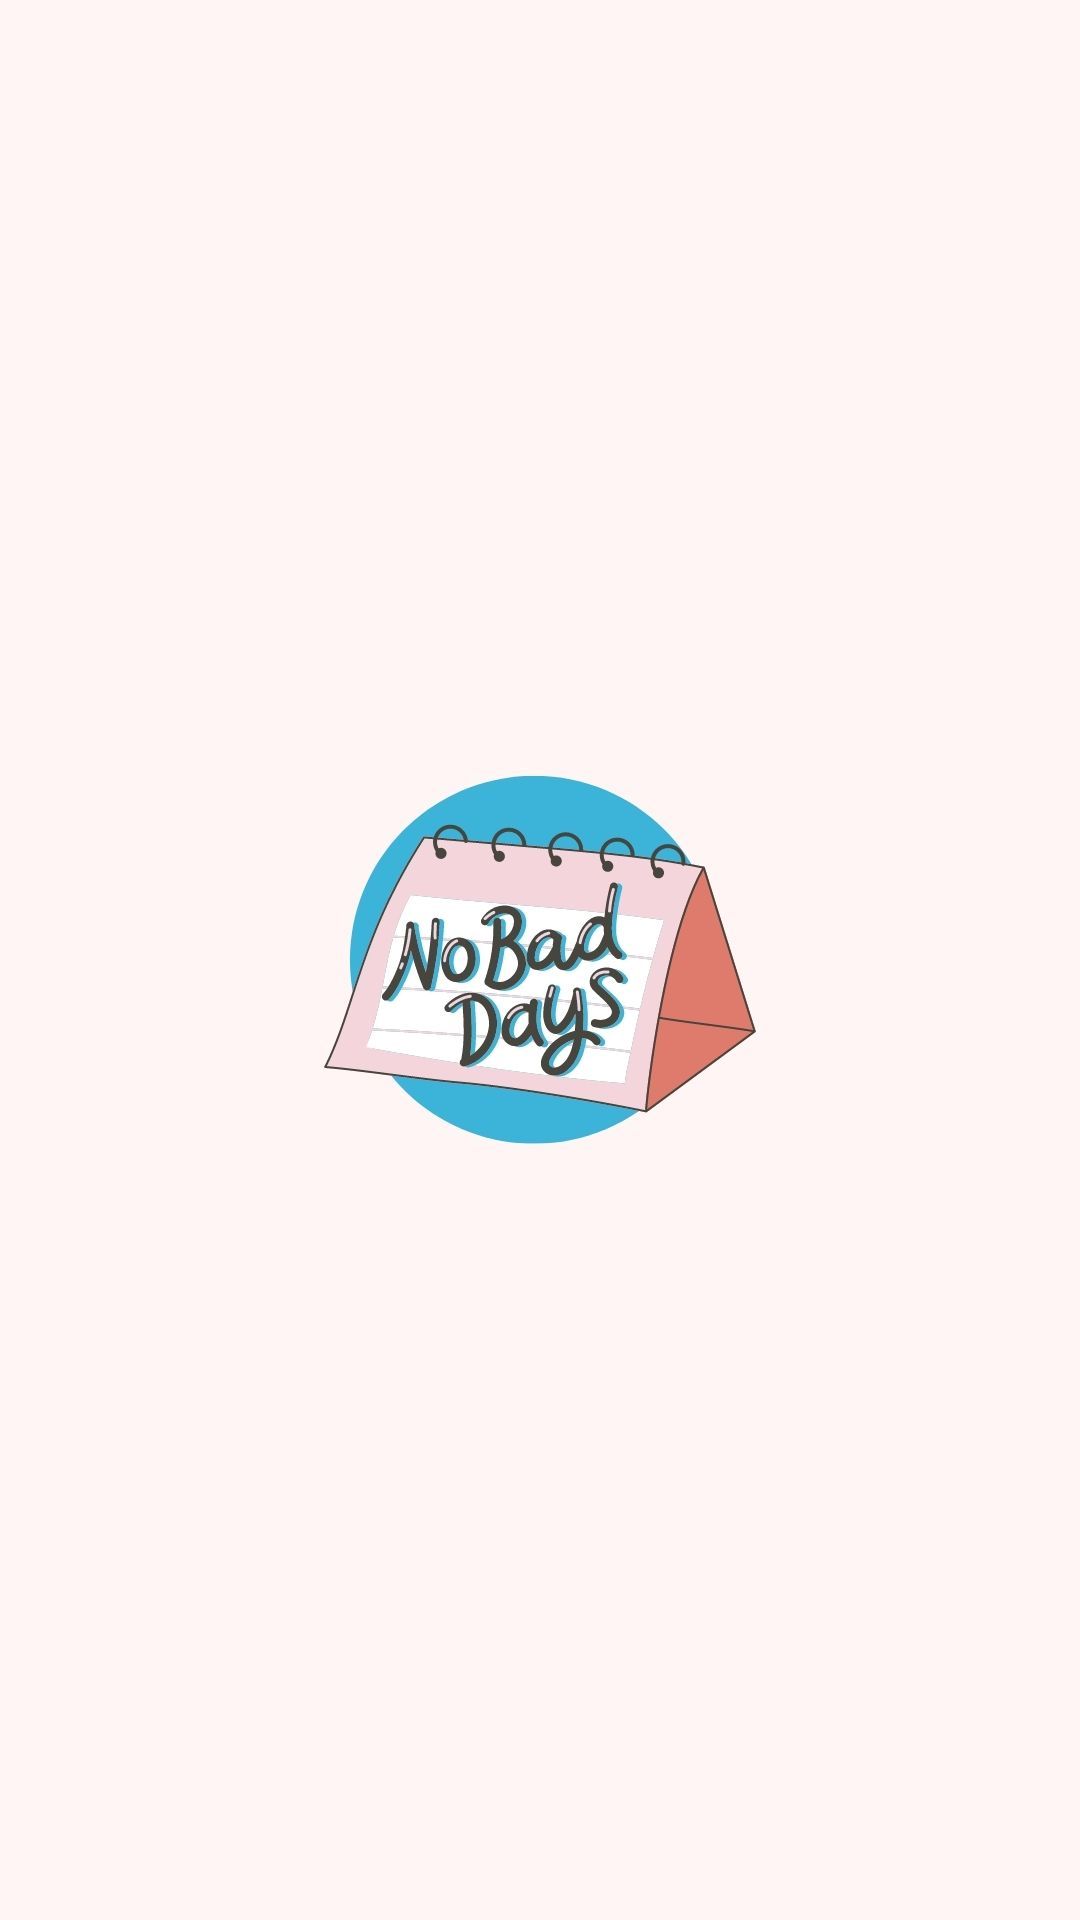 A logo for no bad days - Positive